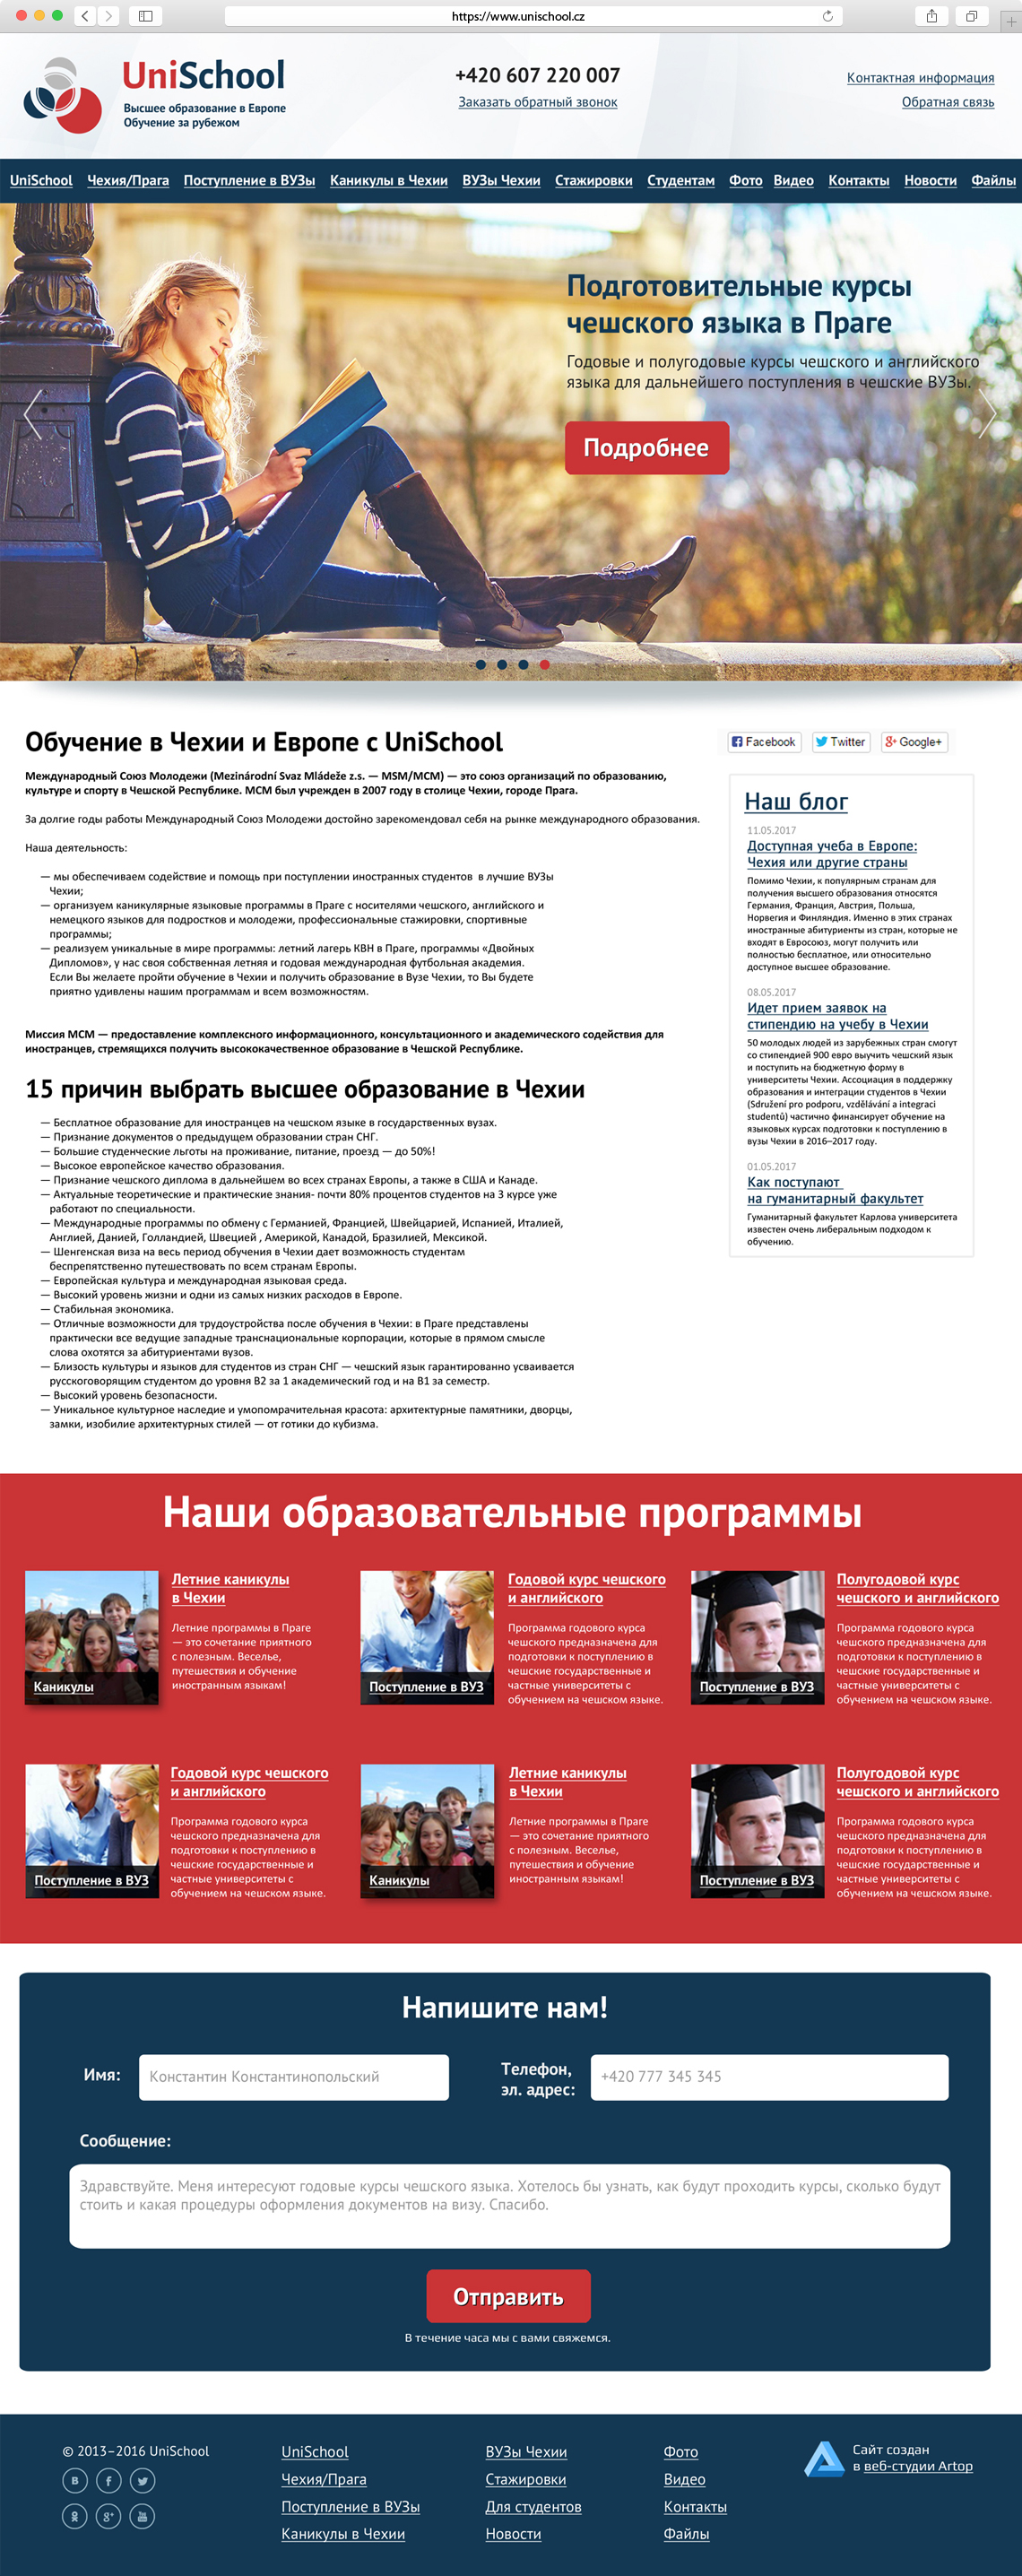 Homepage www.unischool.cz